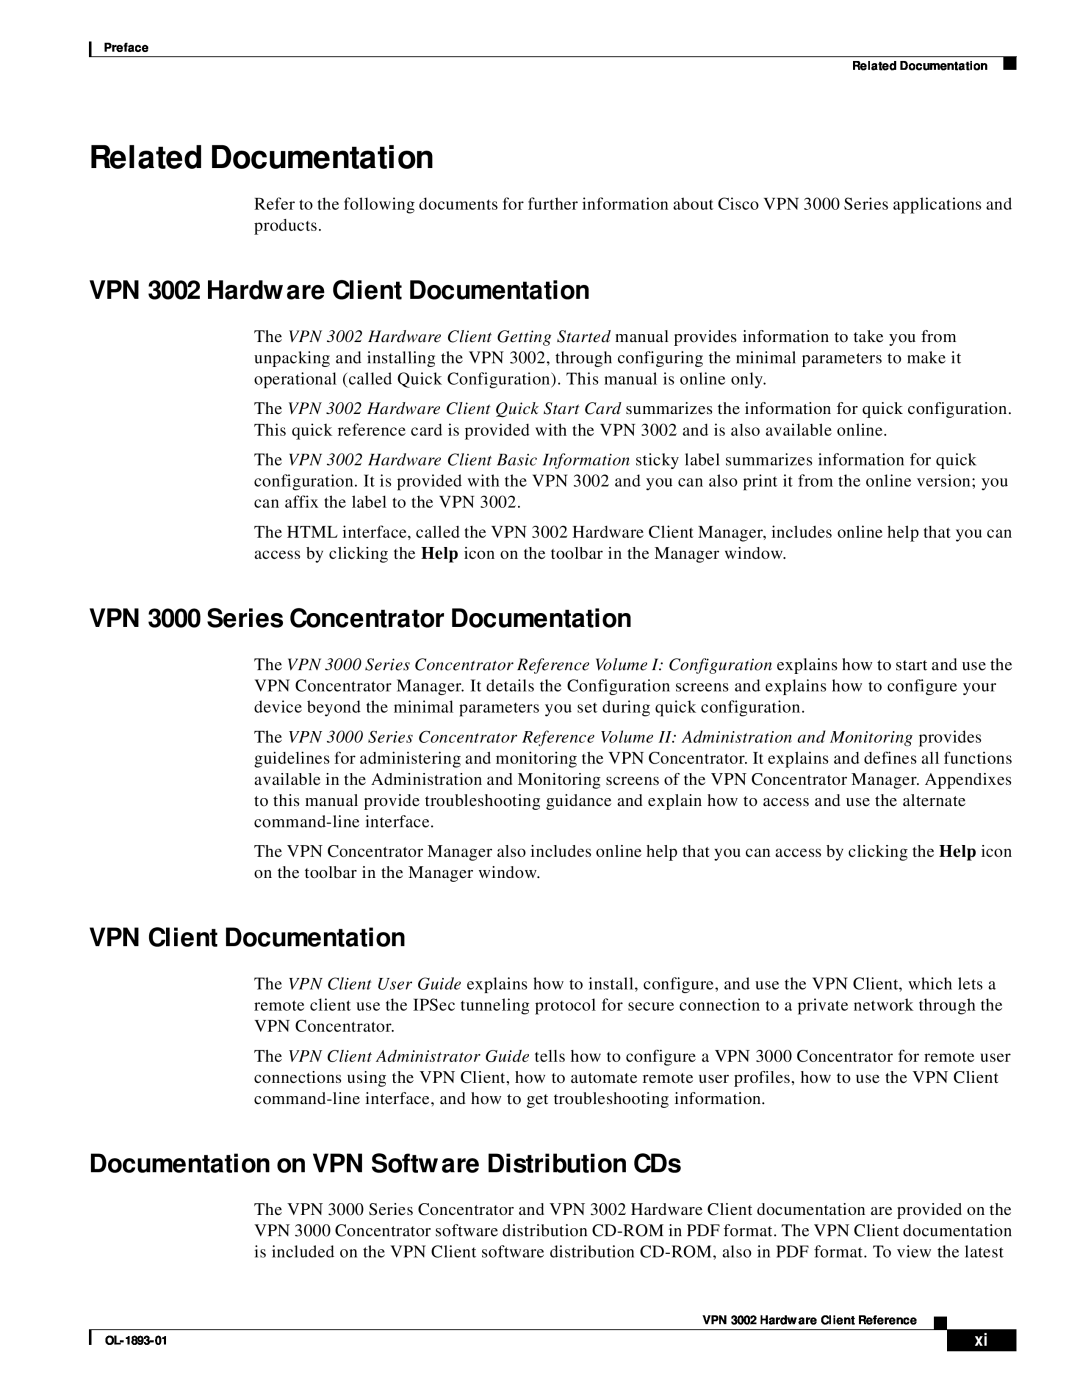 Cisco Systems Related Documentation, VPN 3002 Hardware Client Documentation, VPN 3000 Series Concentrator Documentation 